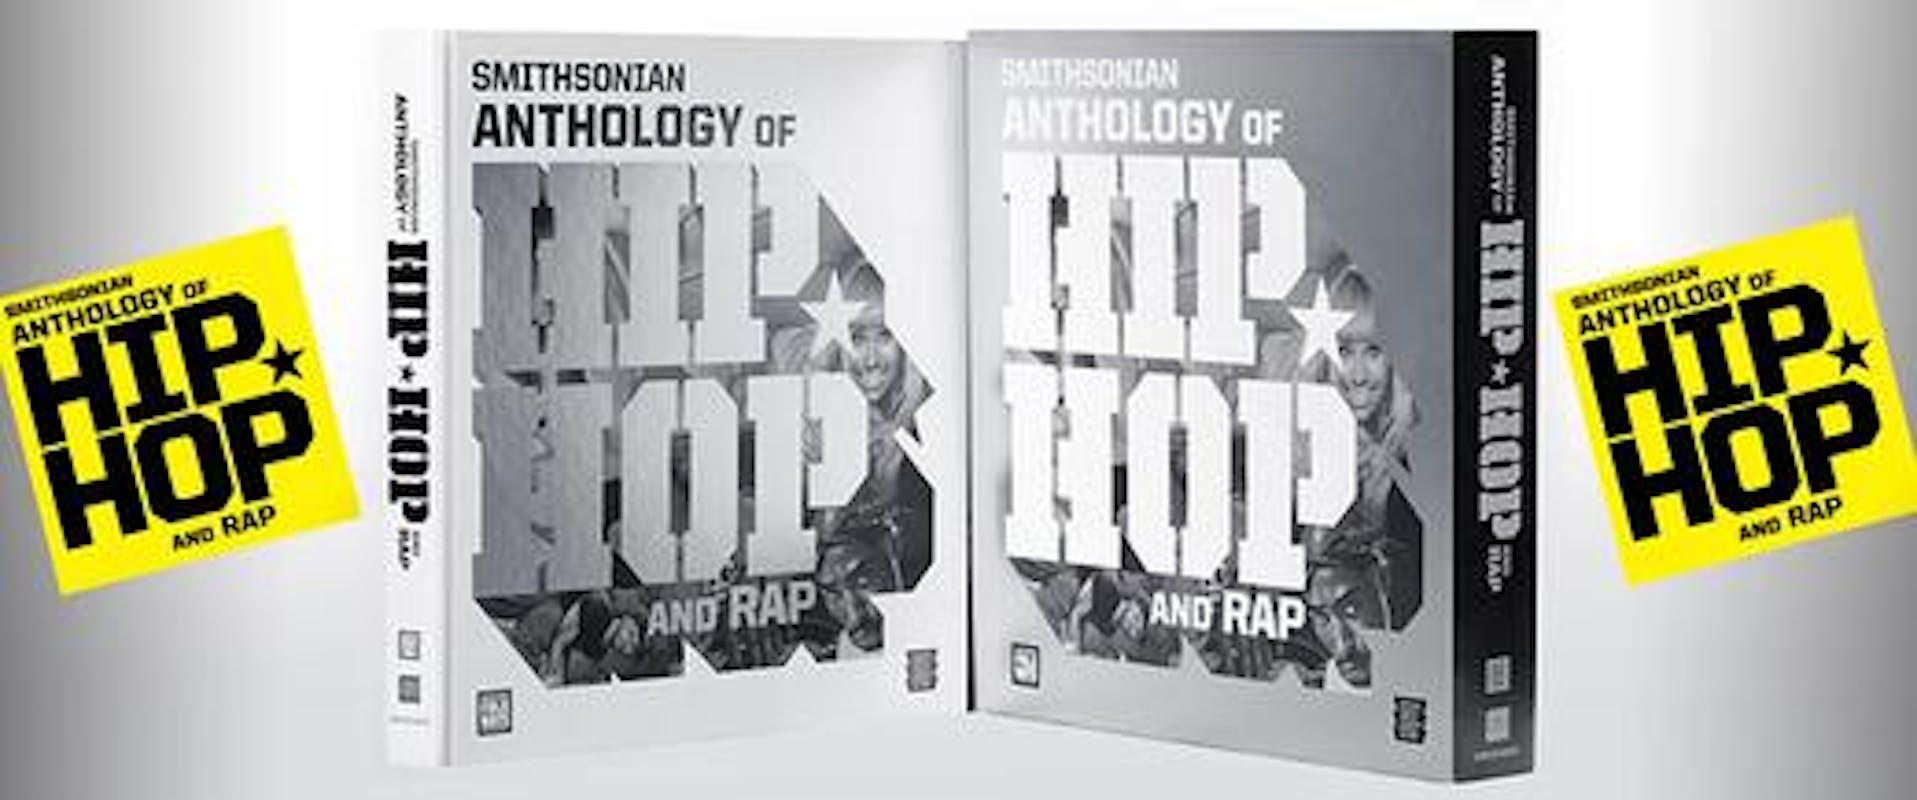 Smithsonian Anthology of Hip-Hop